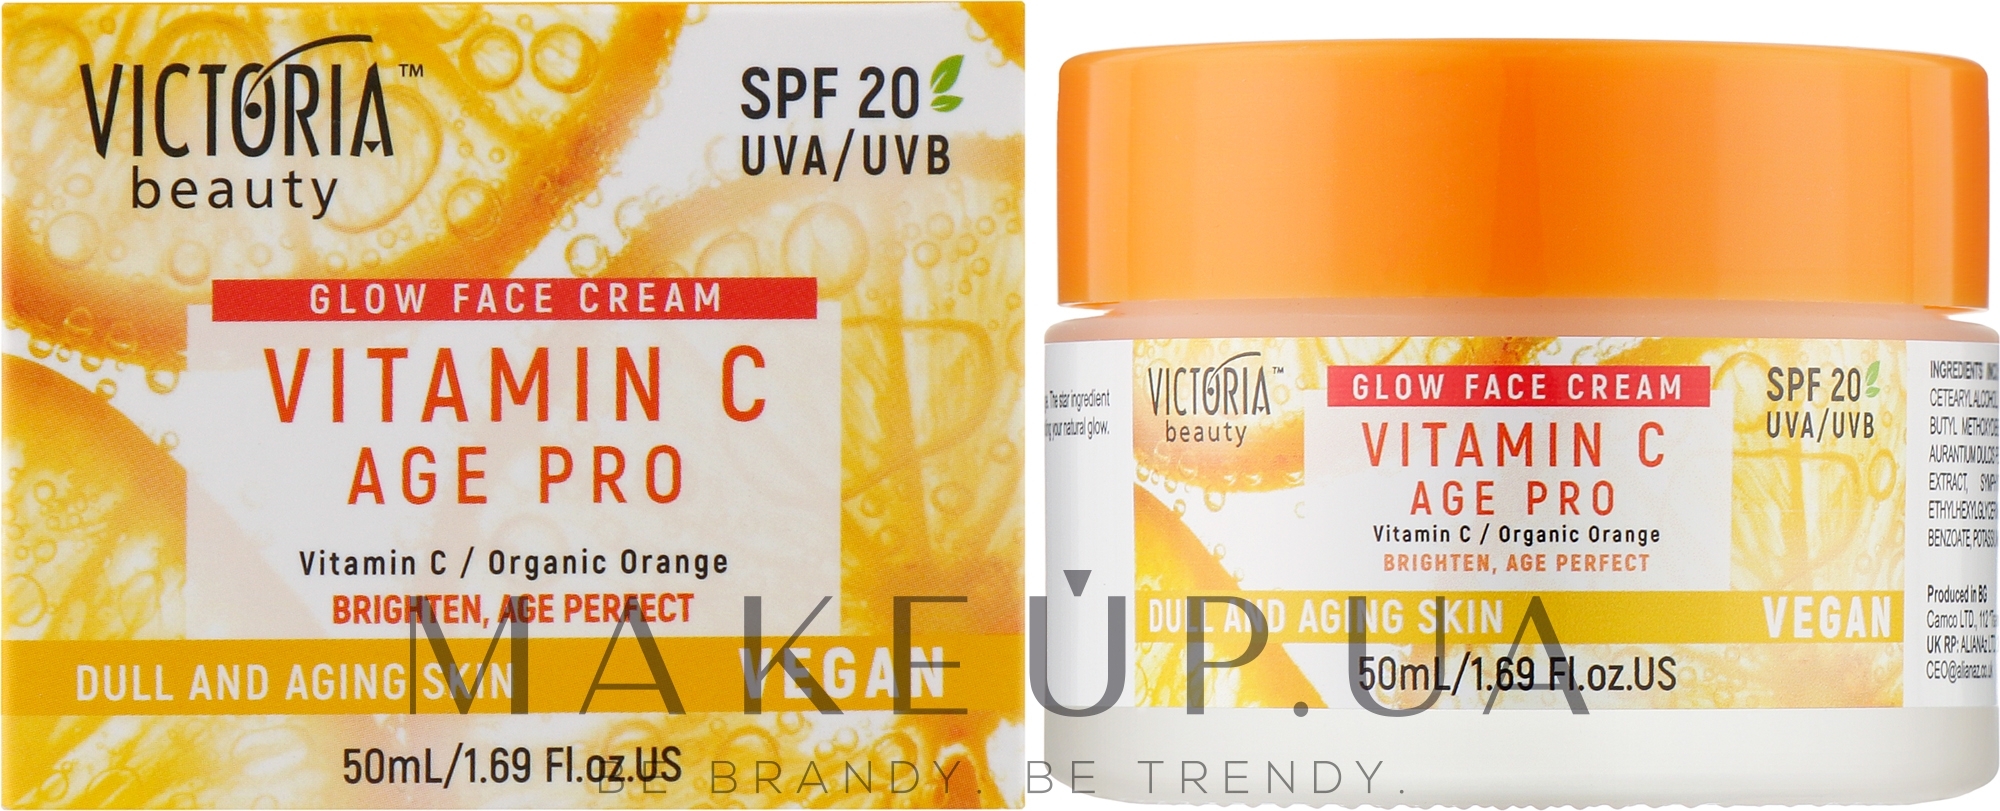 Дневной крем для лица с витамином С - Victoria Beauty С Age Pro SPF 20 — фото 50ml